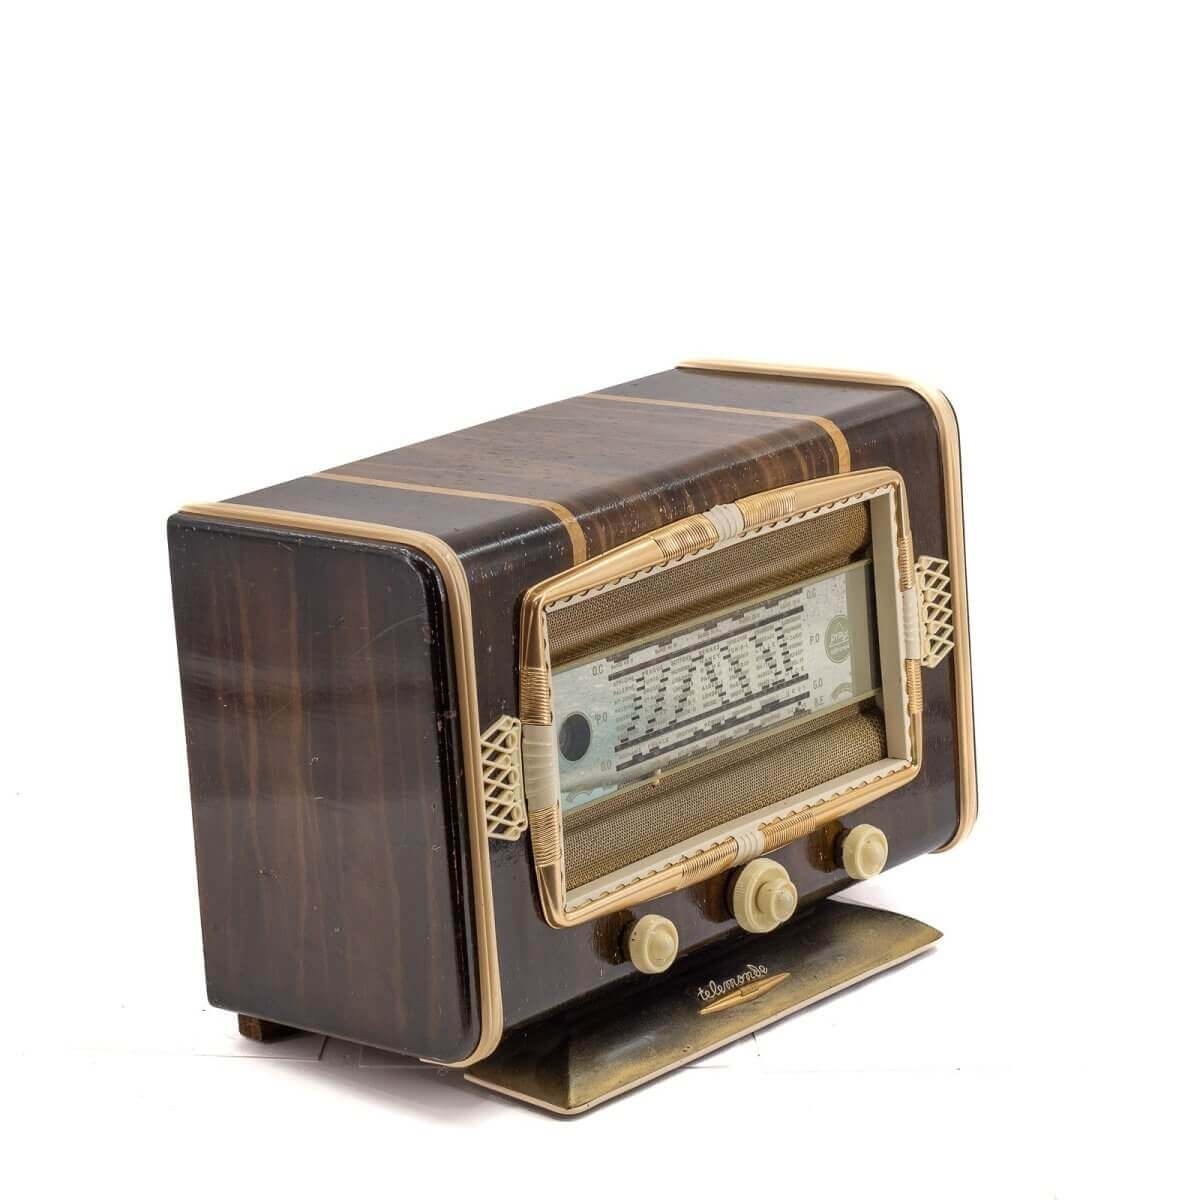 Radio Bluetooth Telemonde Vintage 50’S enceinte connectée bluetooth haut de gamme prodige radio vintage design